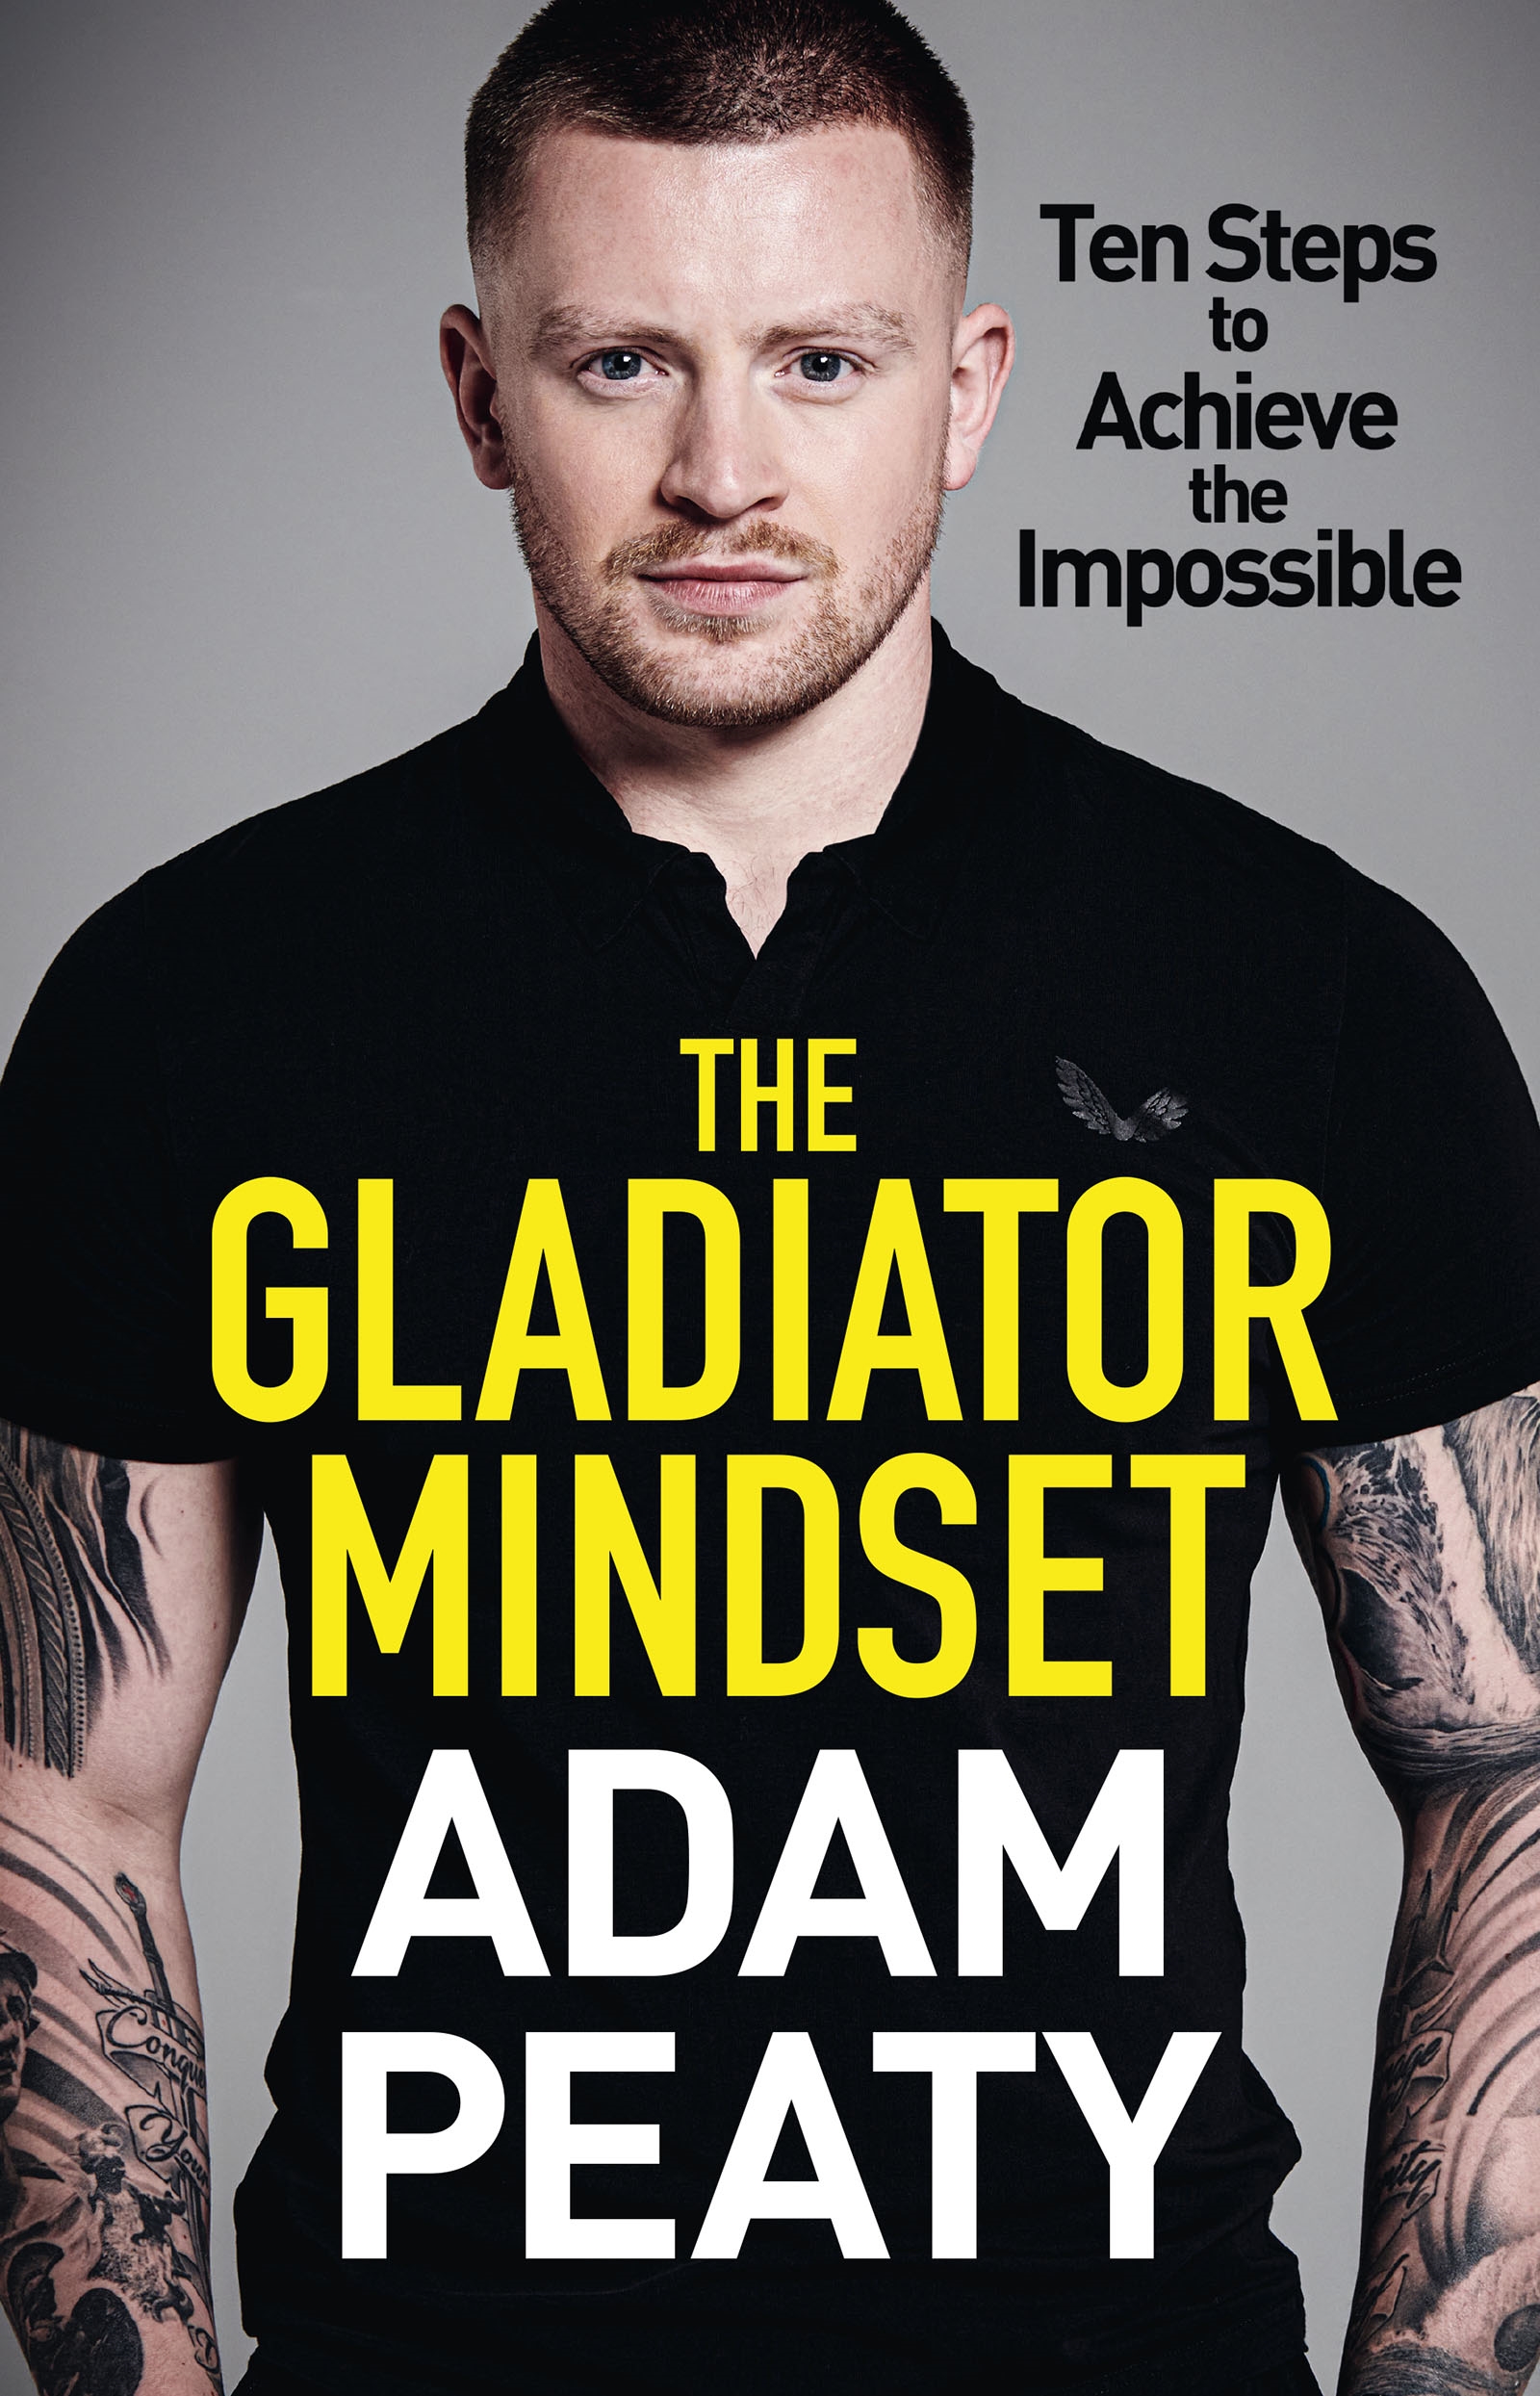 The Gladiator Mindset by Adam Peaty